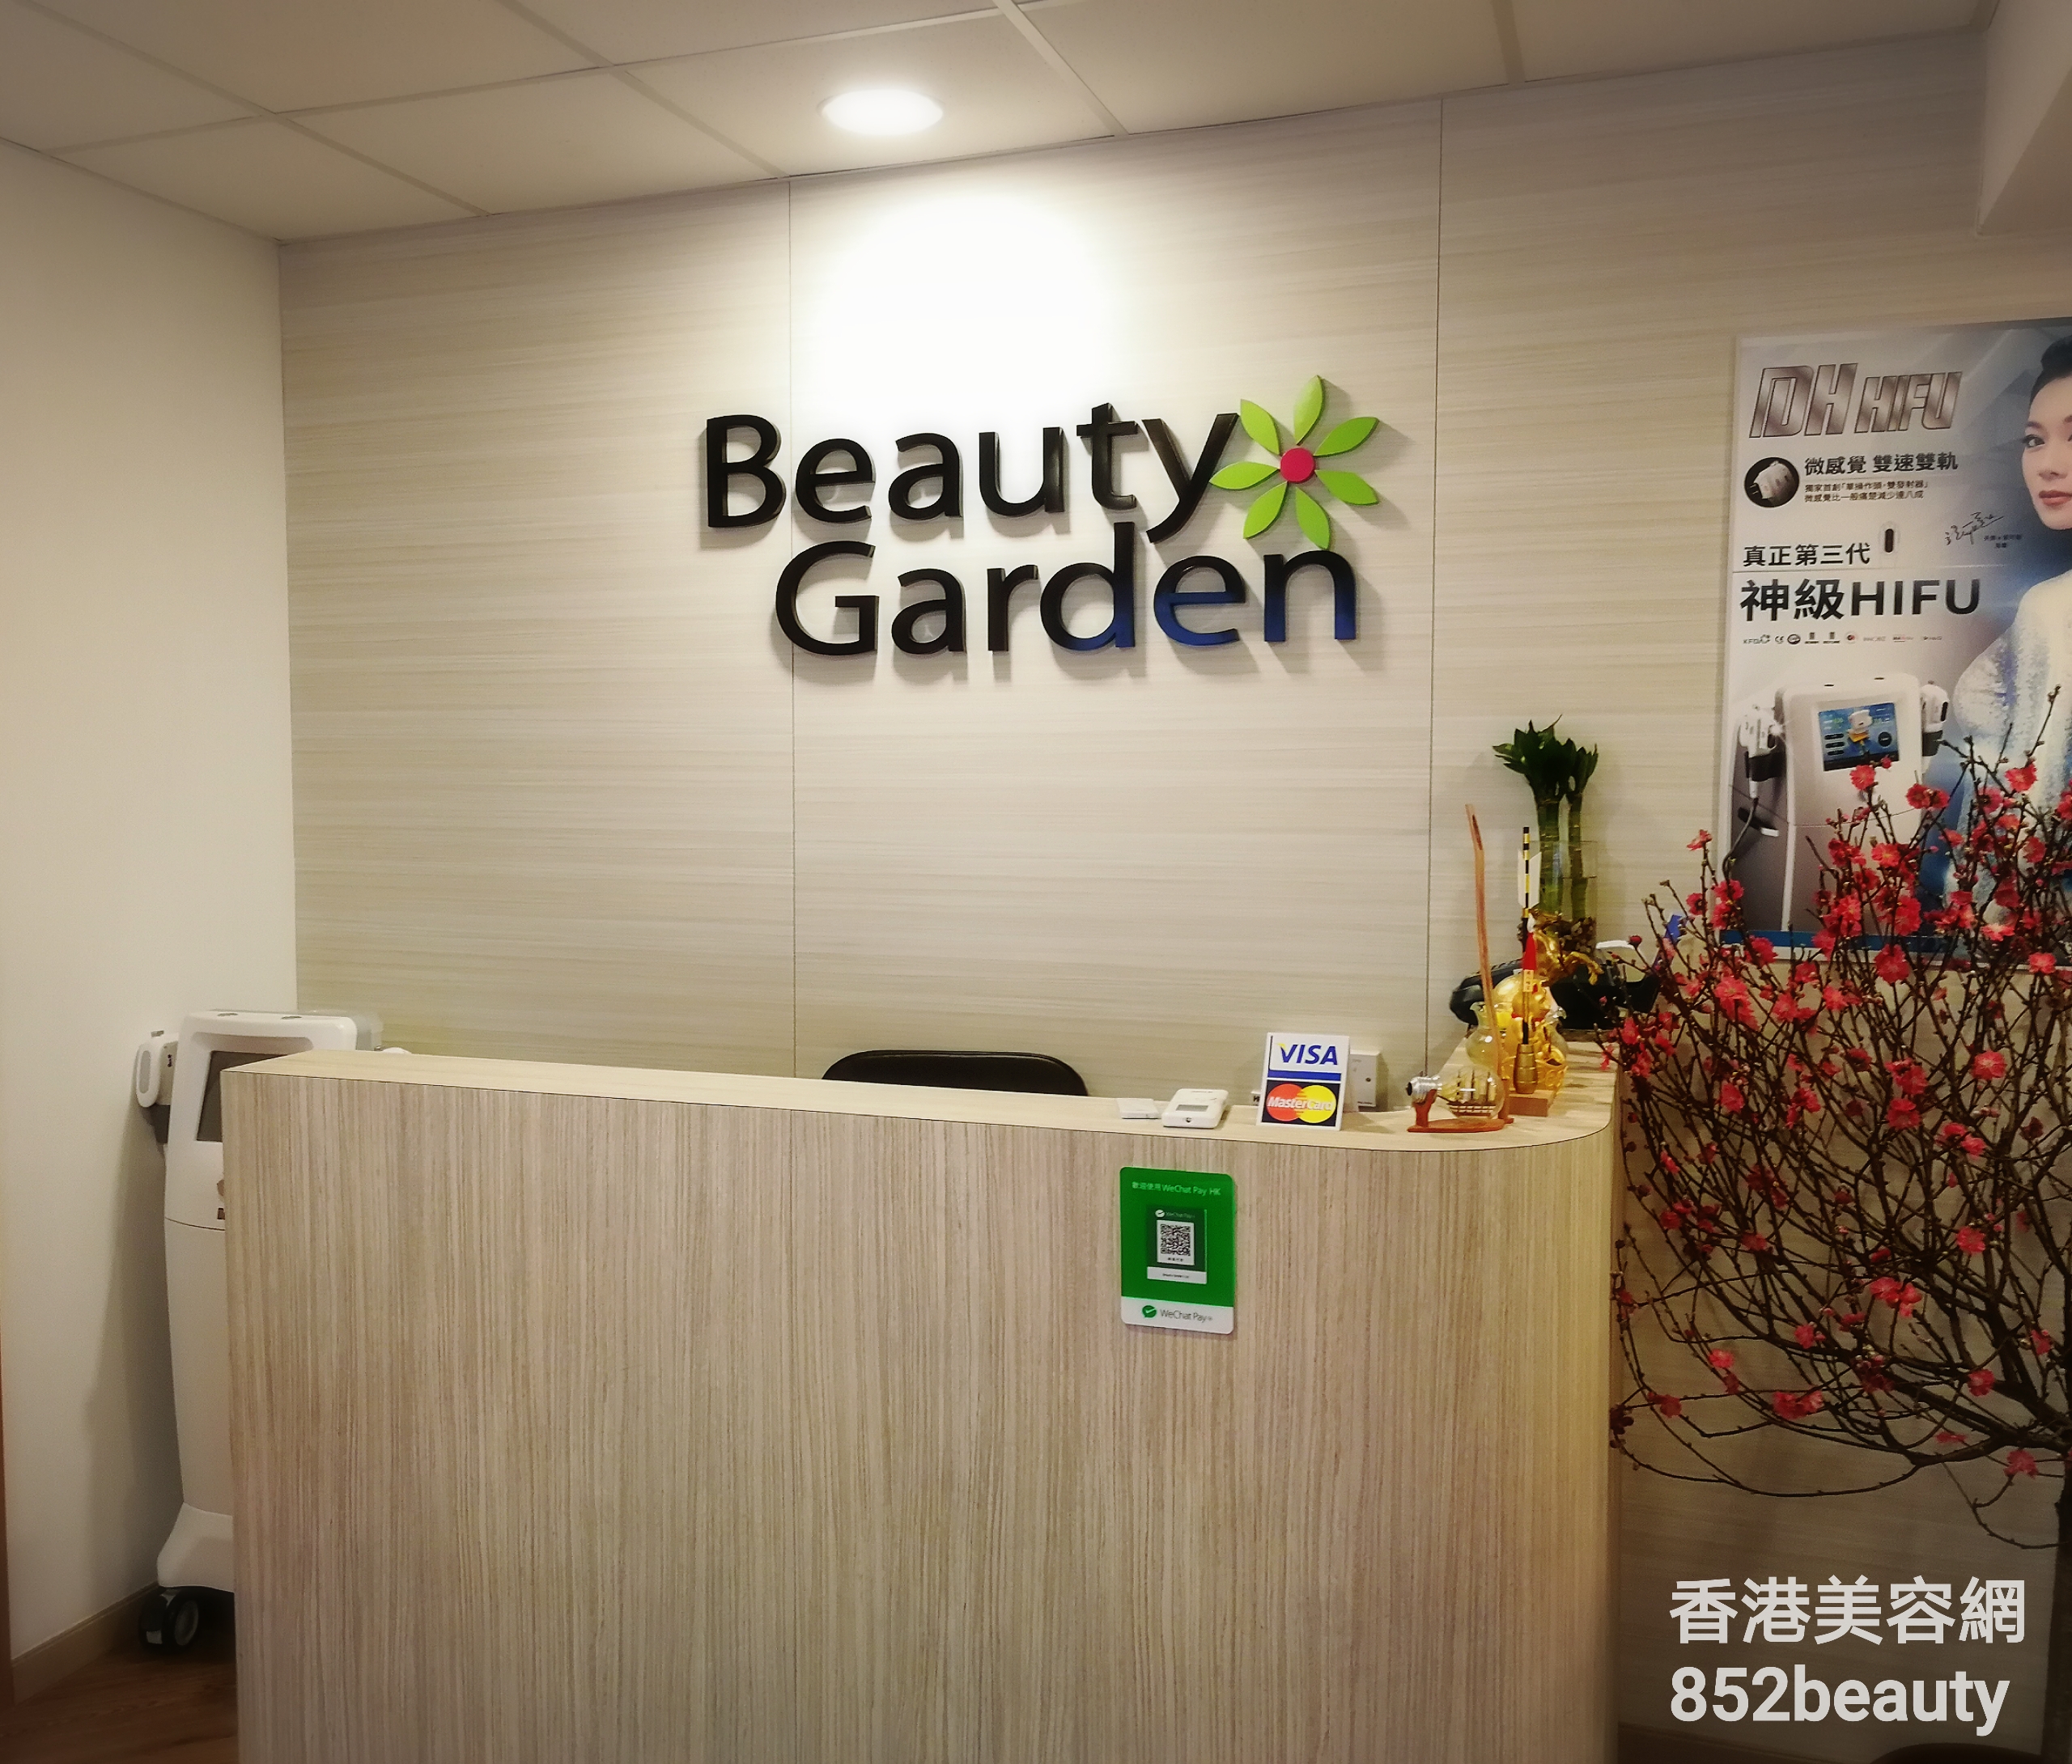 Beauty Salon / Beautician good rated Beauty Garden @ Hong Kong Beauty Salon Hong Kong Beauty Salon